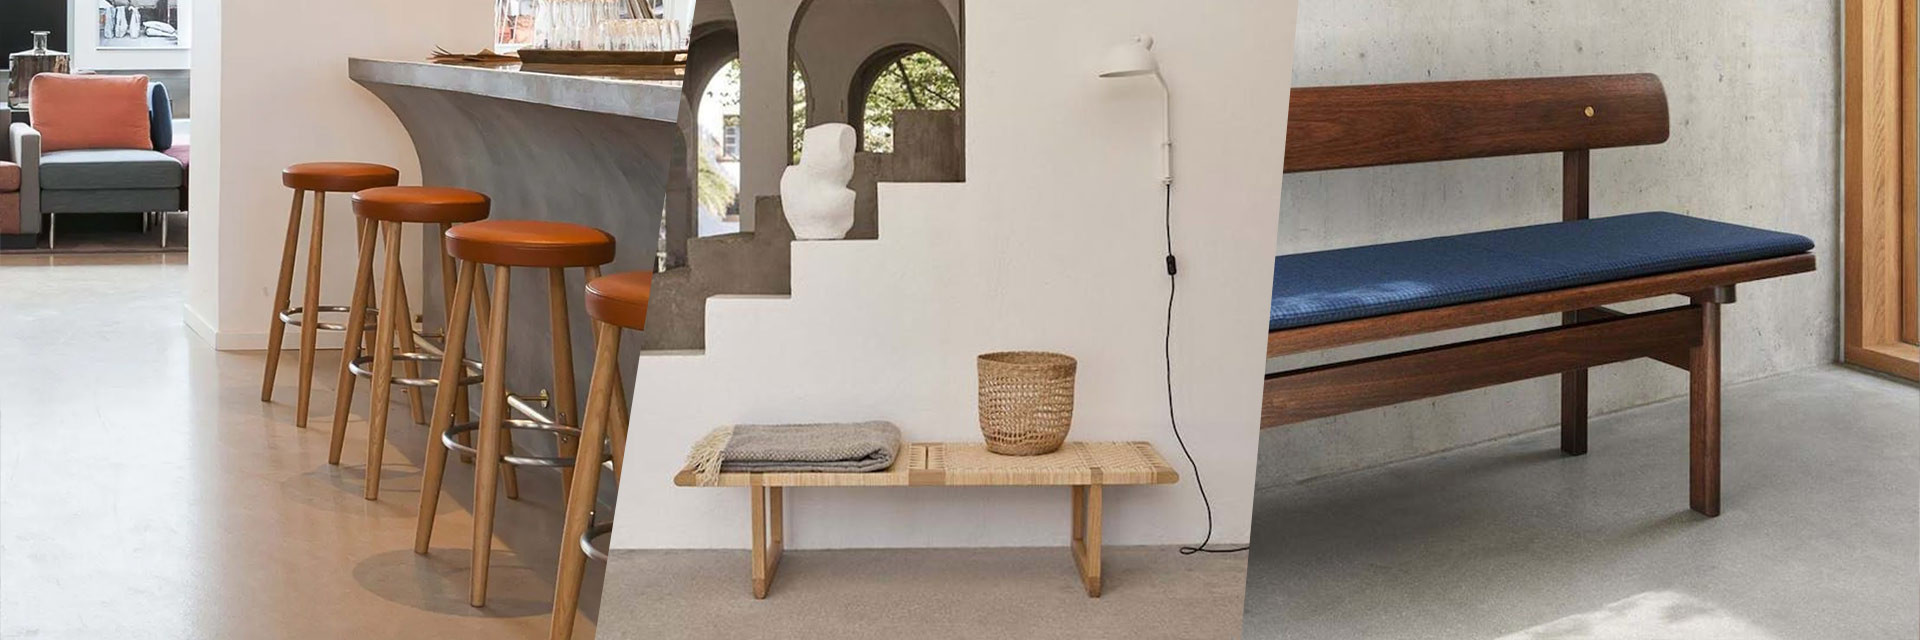 Scandinavian design wooden stools and benches - La boutique danoise